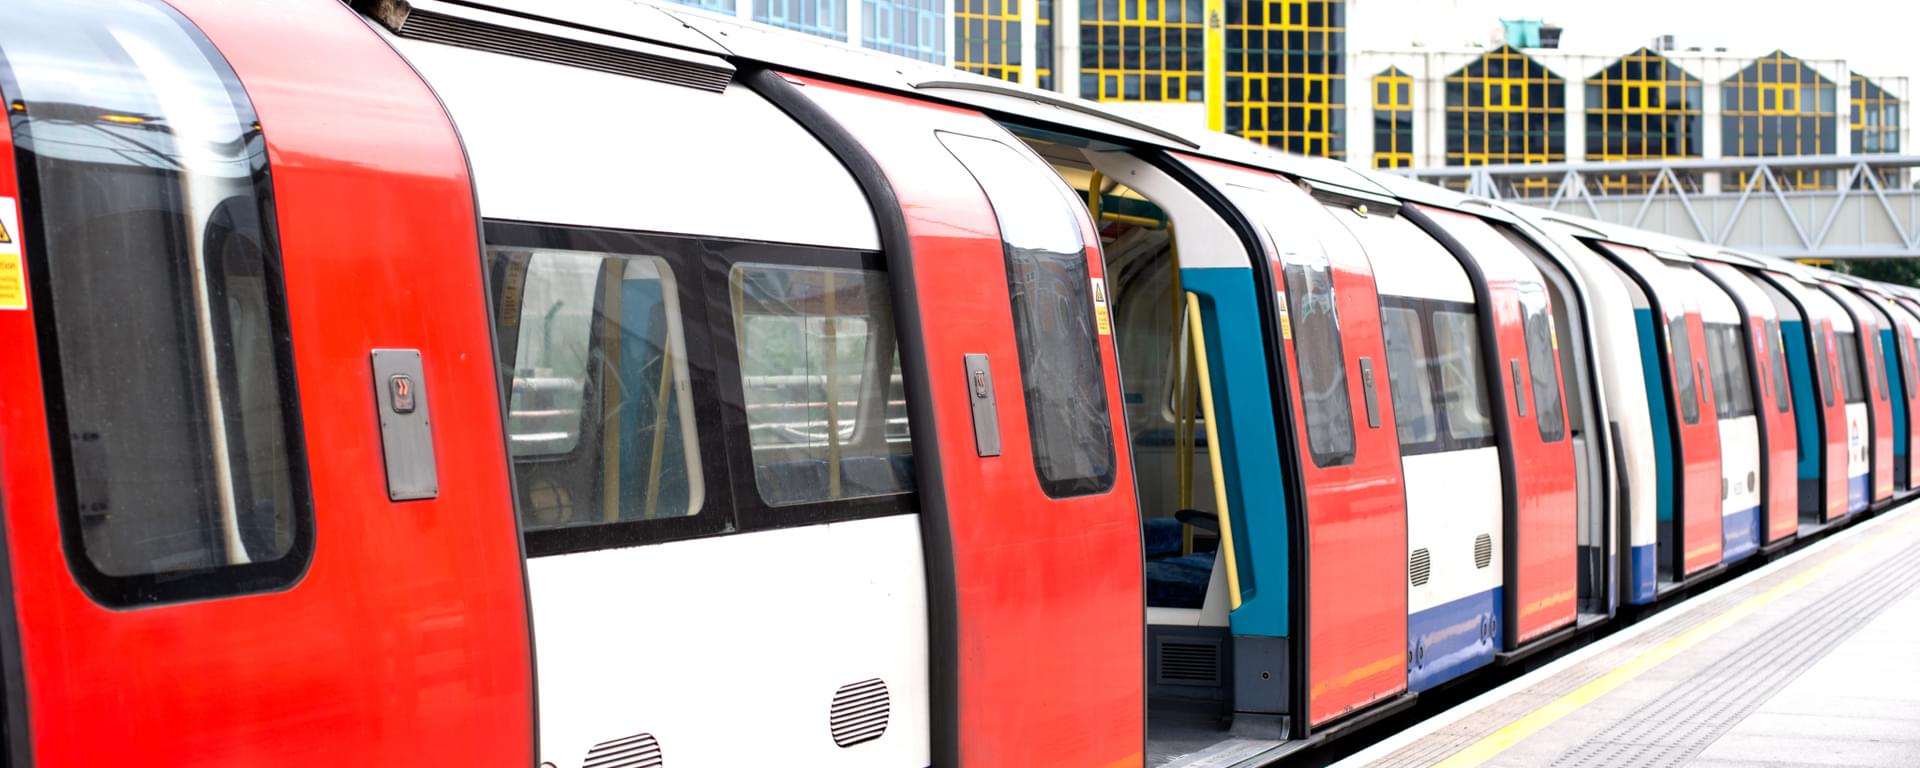 London Underground tube train at platform